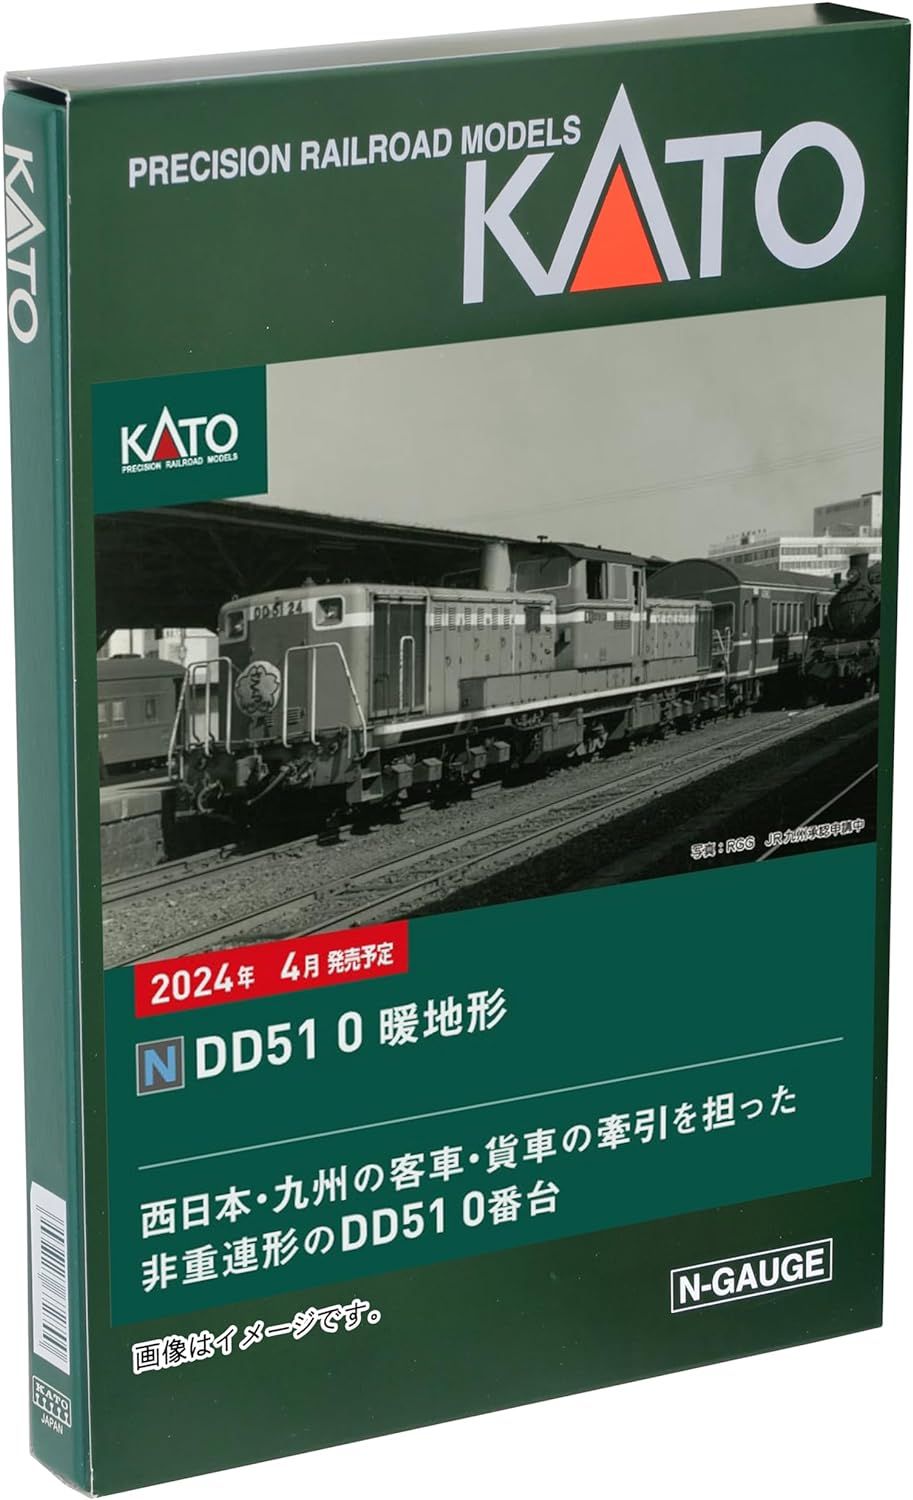 KATO N Gauge DD51 0 Warm Terrain 7008-K Model Railway Diesel Locomotive - BanzaiHobby